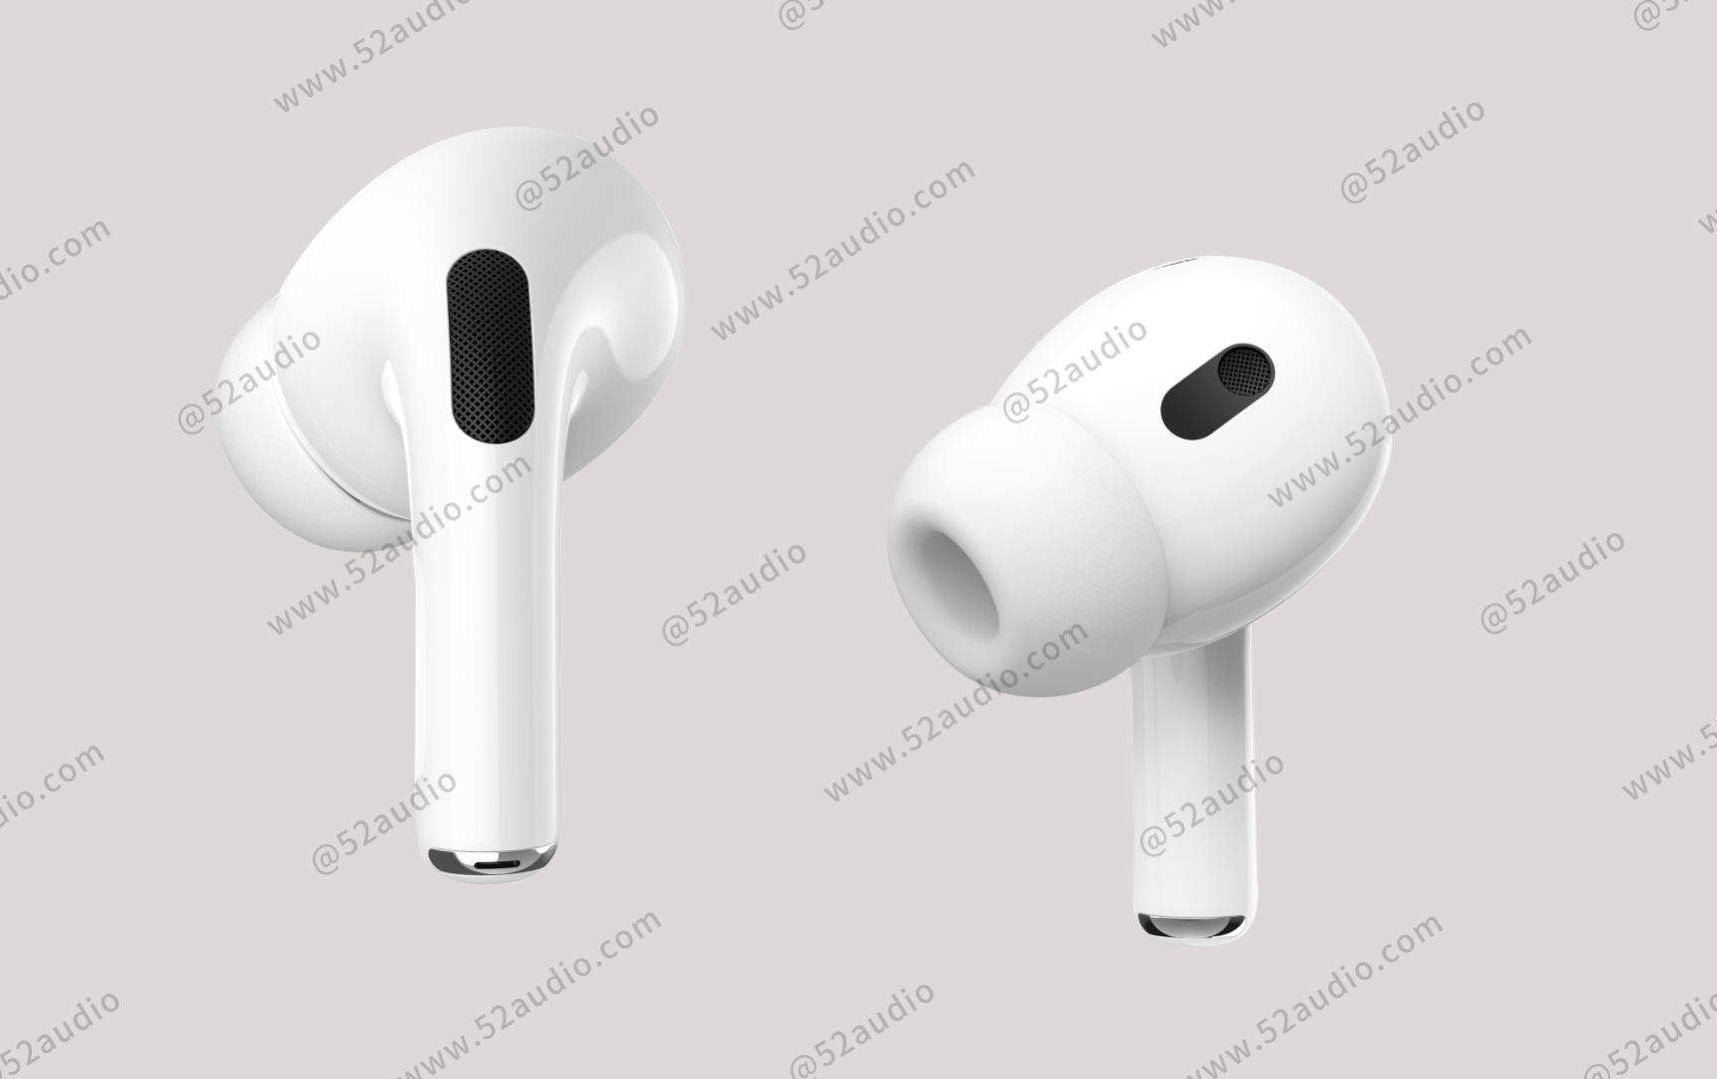 Apple AirPods Pro 2: Design of next-generation premium earbuds ...